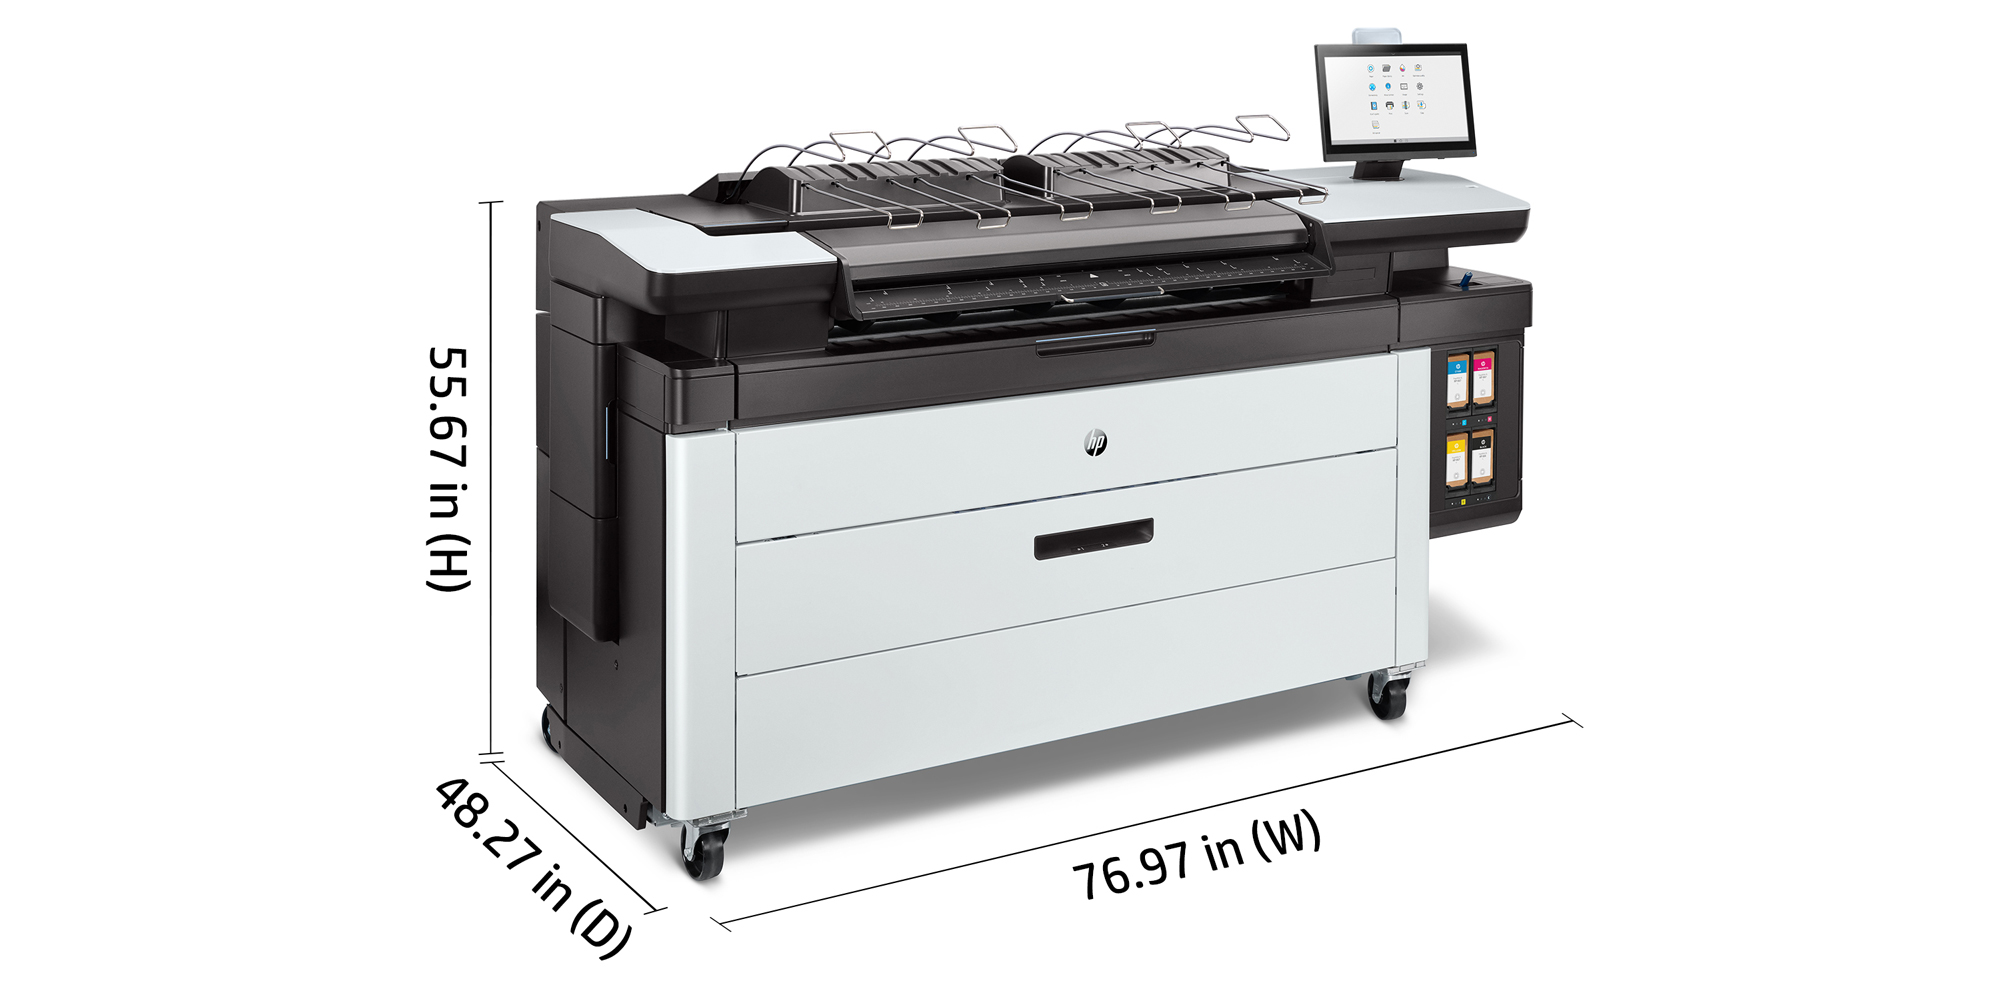 PageWide XL 4700 Printer series